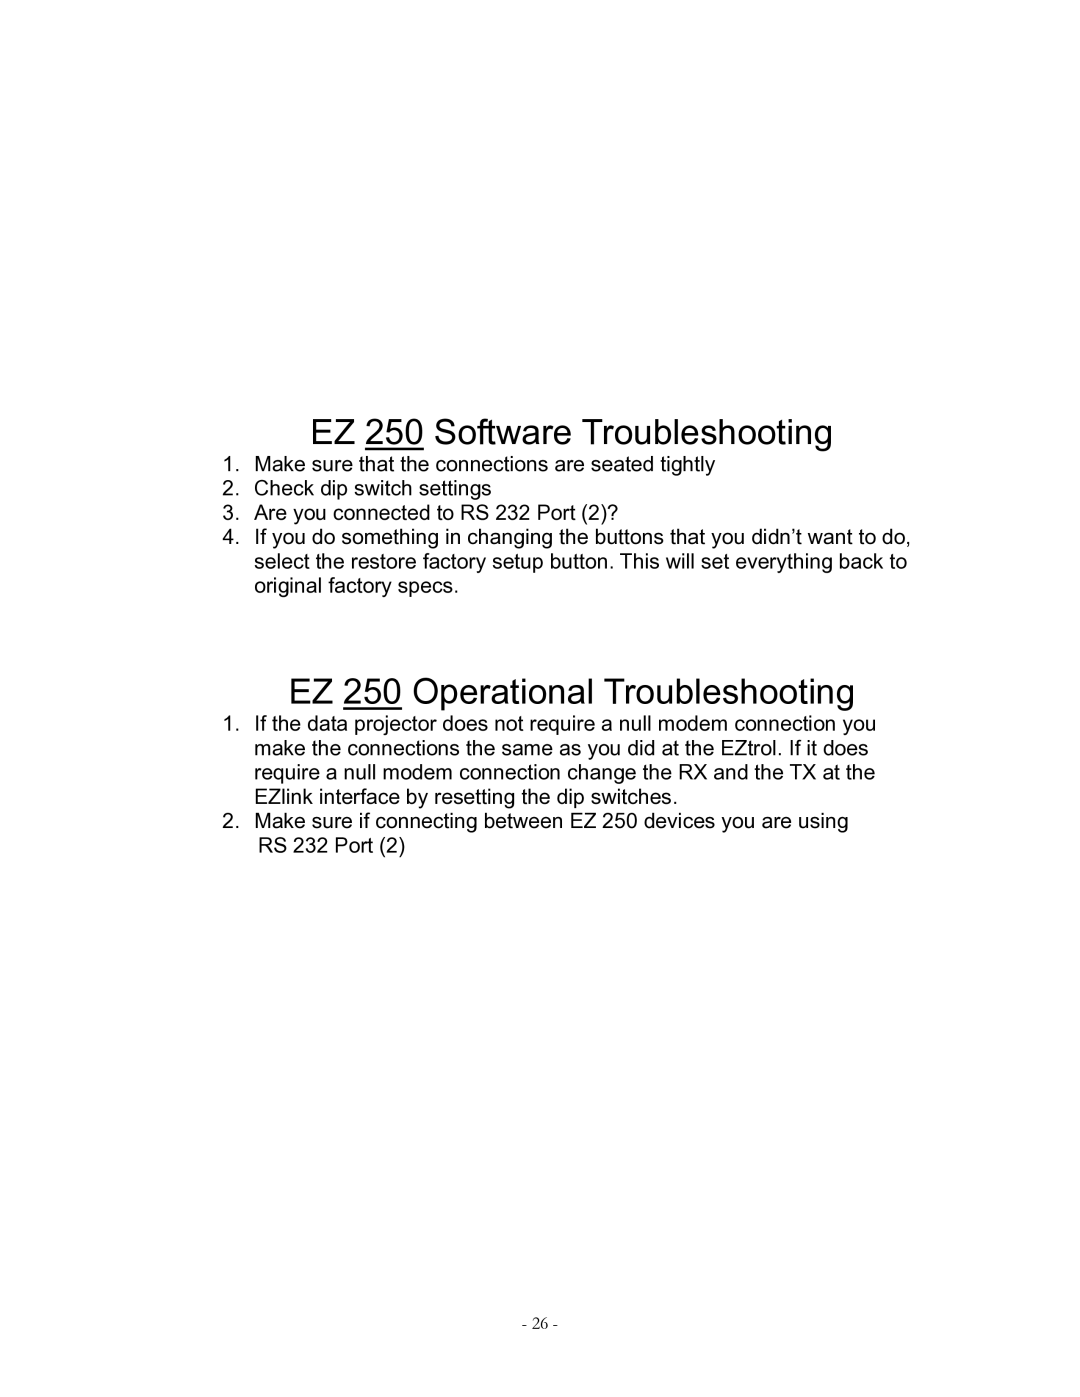 Eiki owner manual EZ 250 Software Troubleshooting, EZ 250 Operational Troubleshooting 